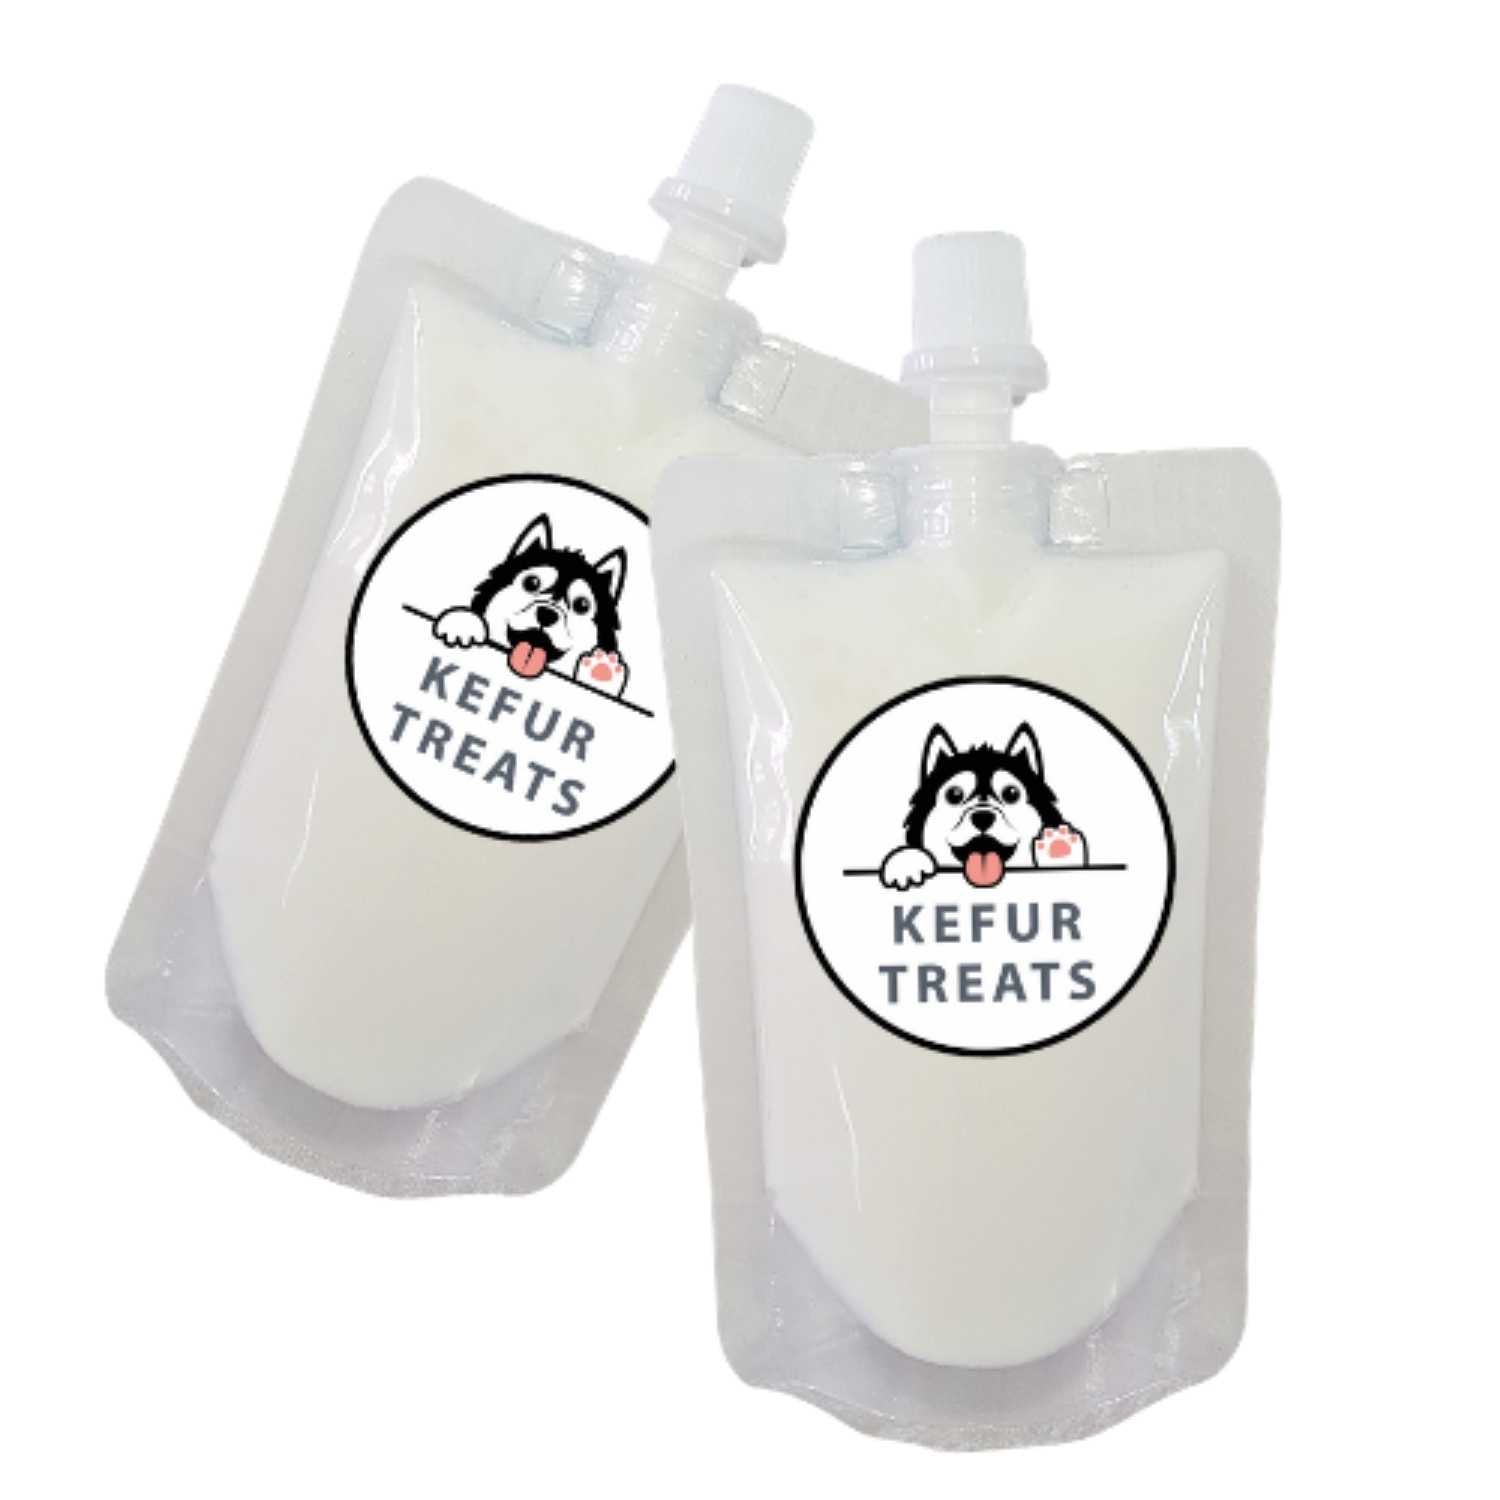 Milk Kefir Kefur Treats Twin Liquid Pouch 250ml Original